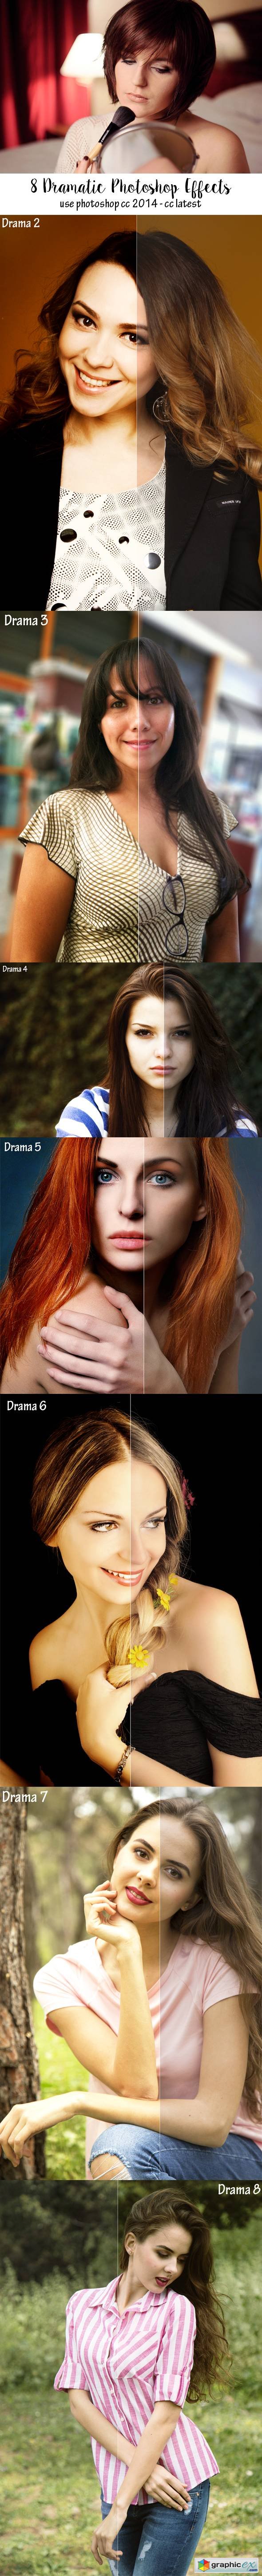 8 Dramatic Photoshop Effects